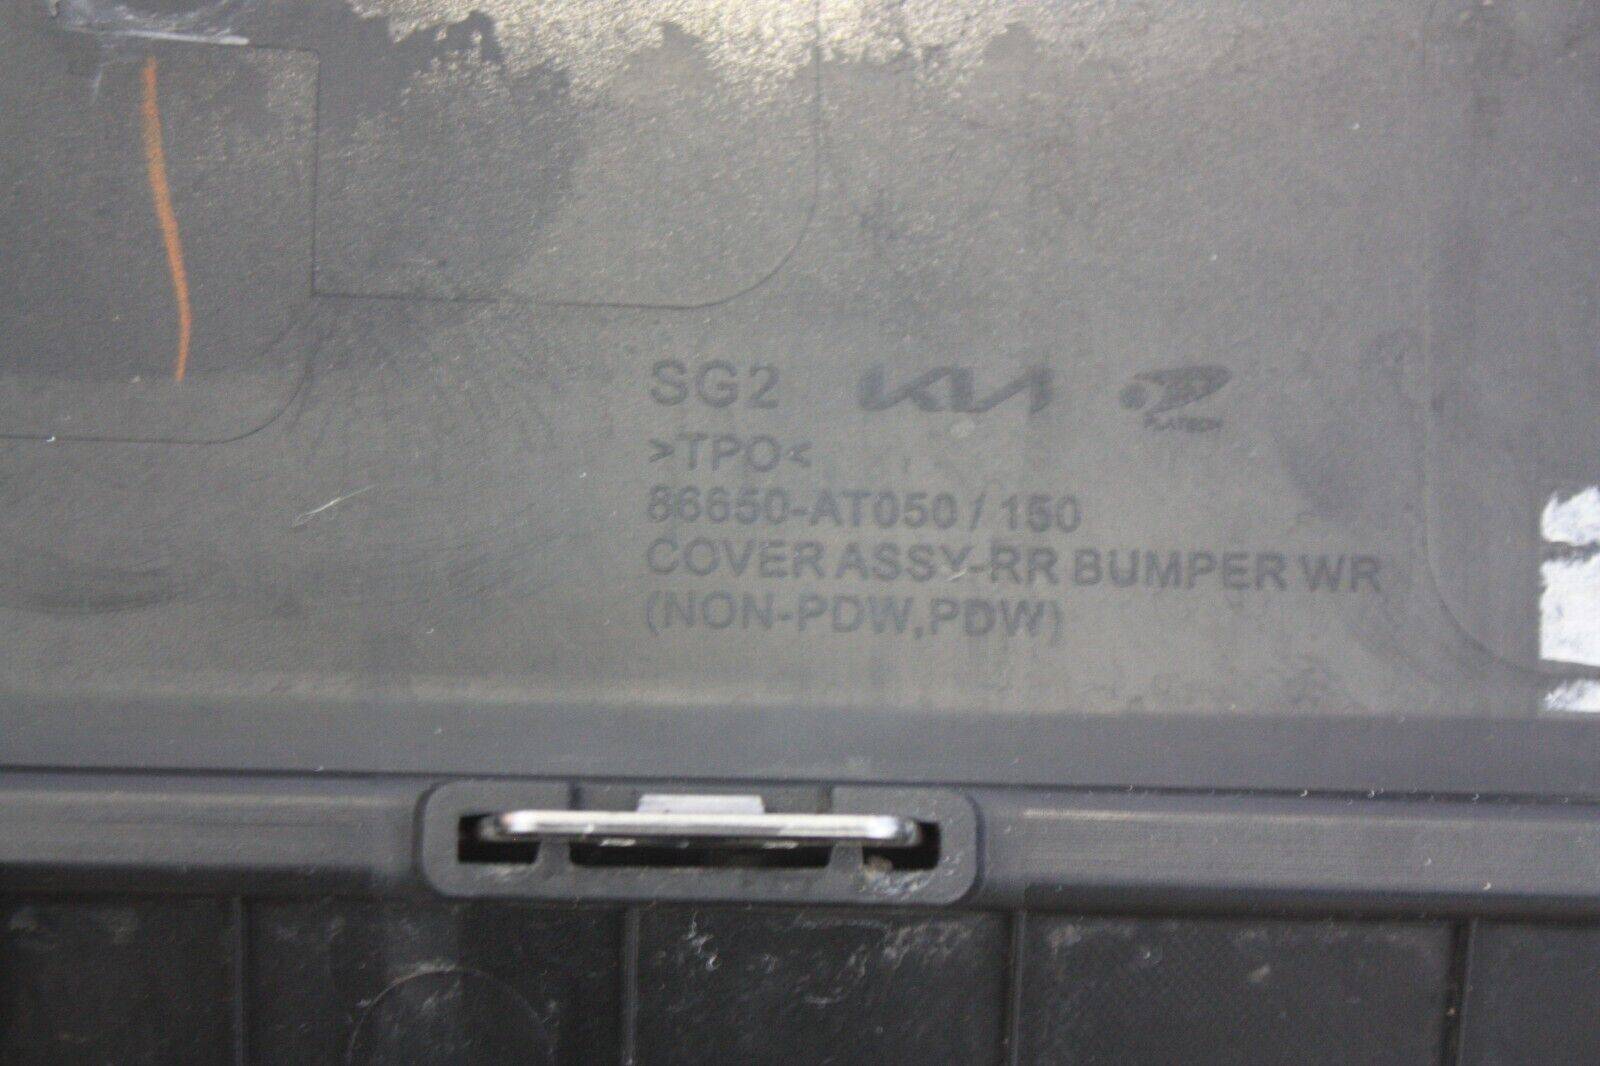 Kia-Niro-Electric-Rear-Bumper-2022-ON-86650-AT050-Genuine-DAMAGED-176253017057-12